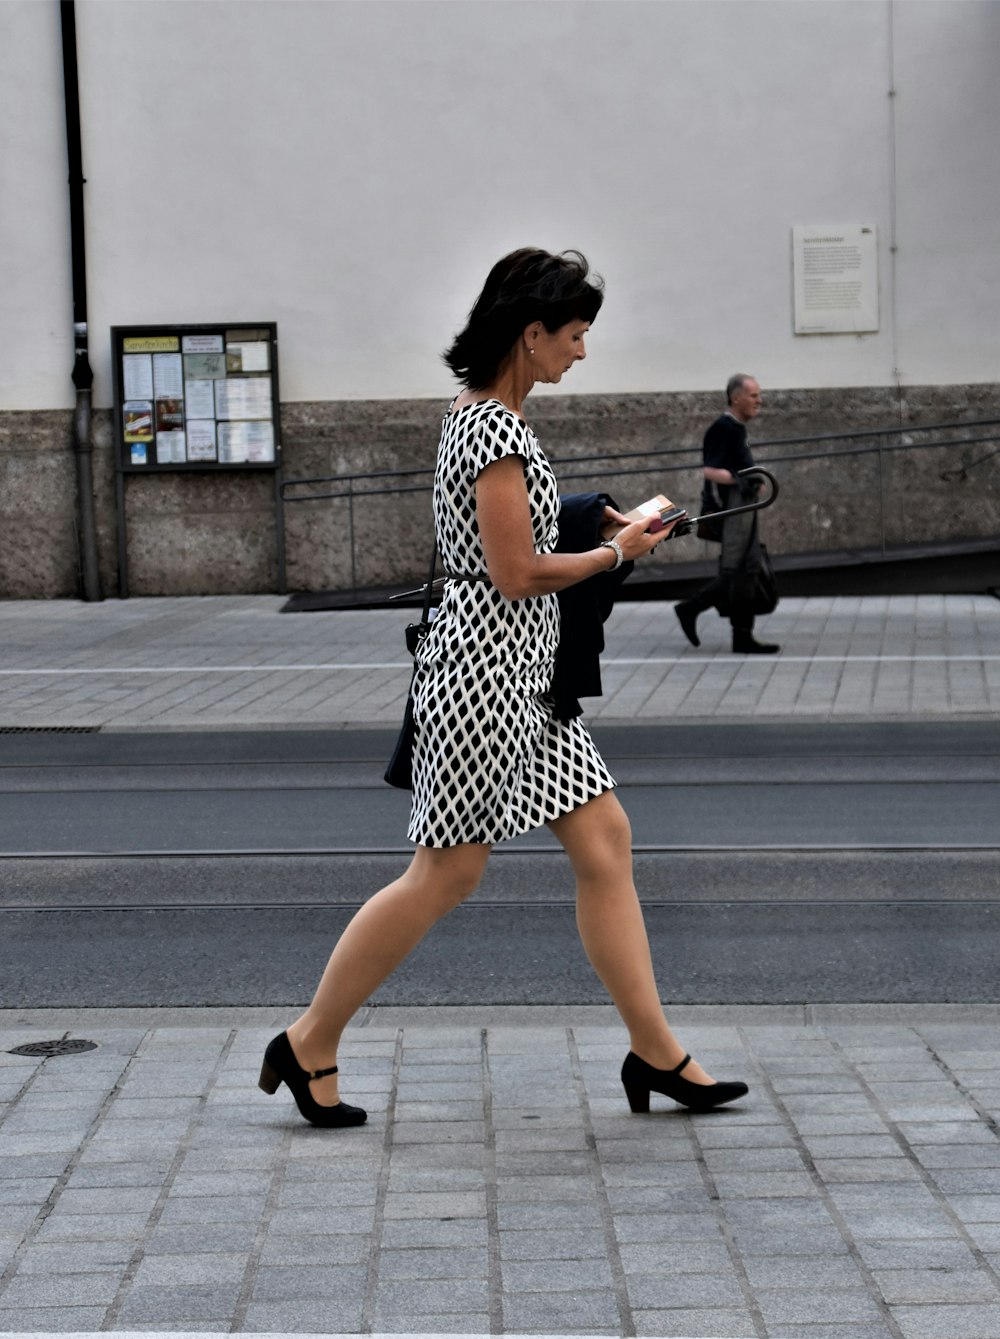 woman in black and white polka dots dress walking on sidewalk during daytime